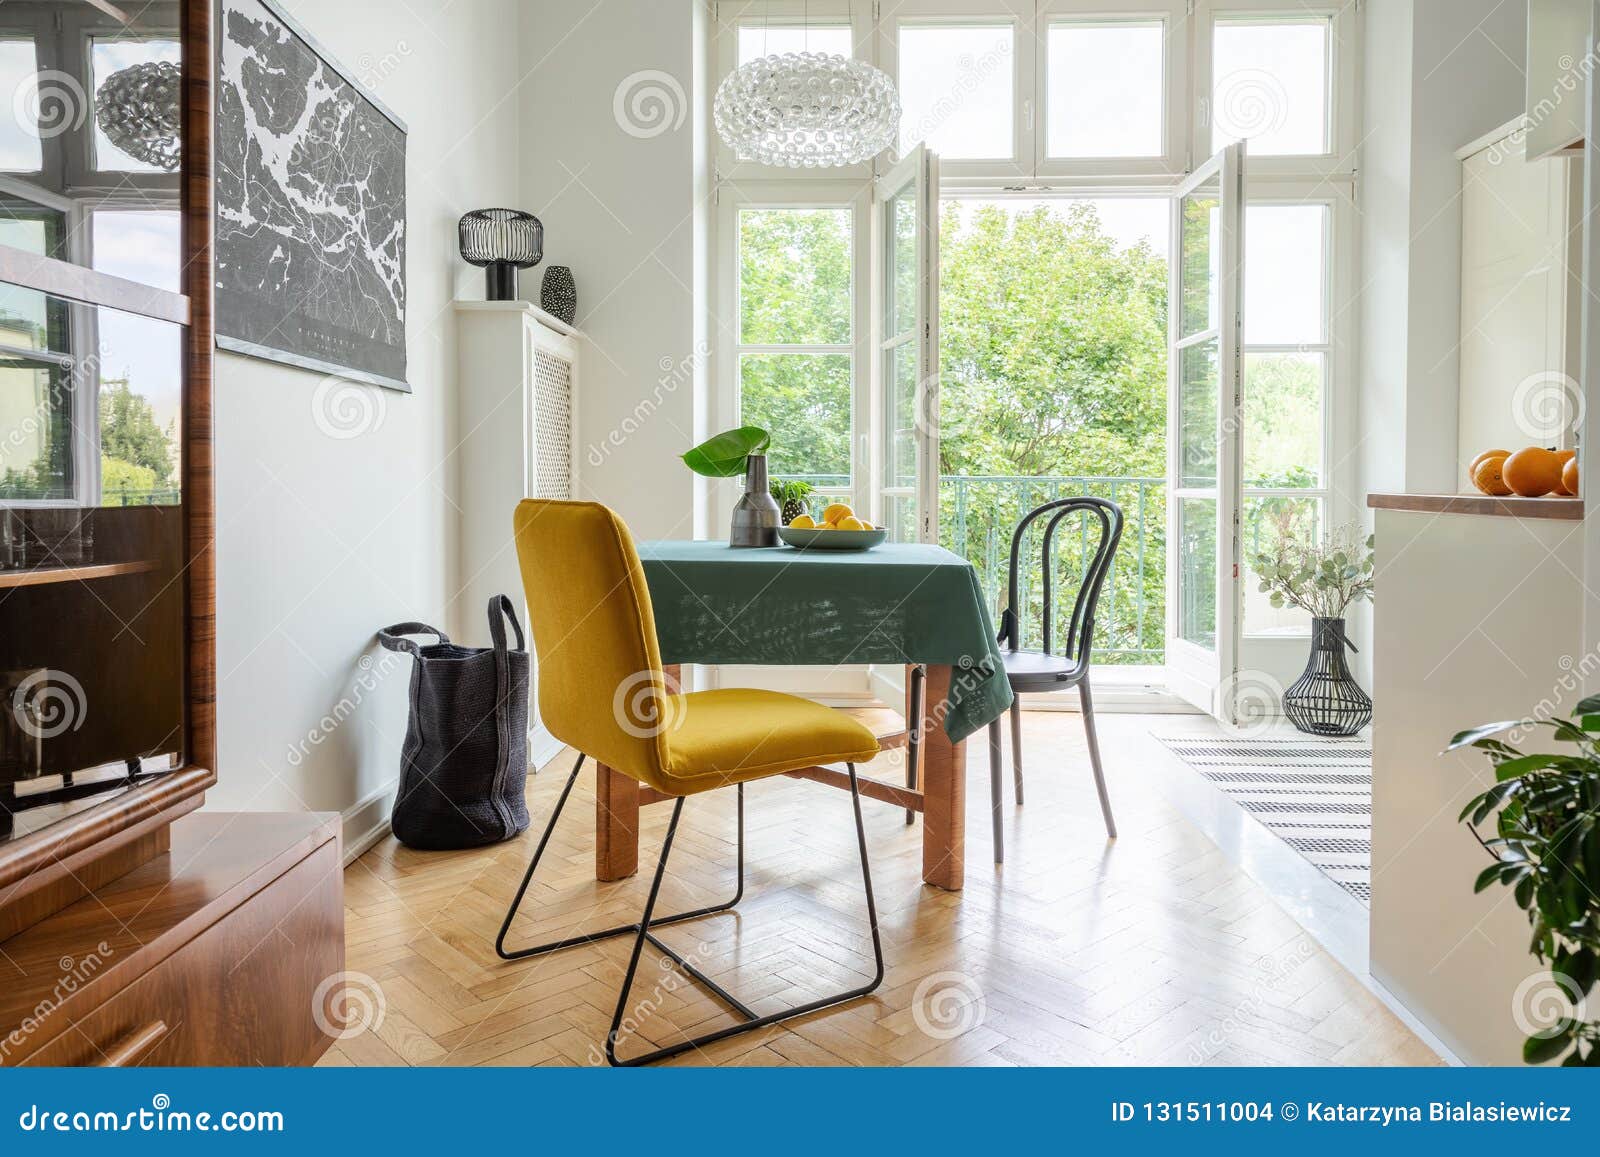 stylish apartment decor idea, eclectic kitchen with balcony